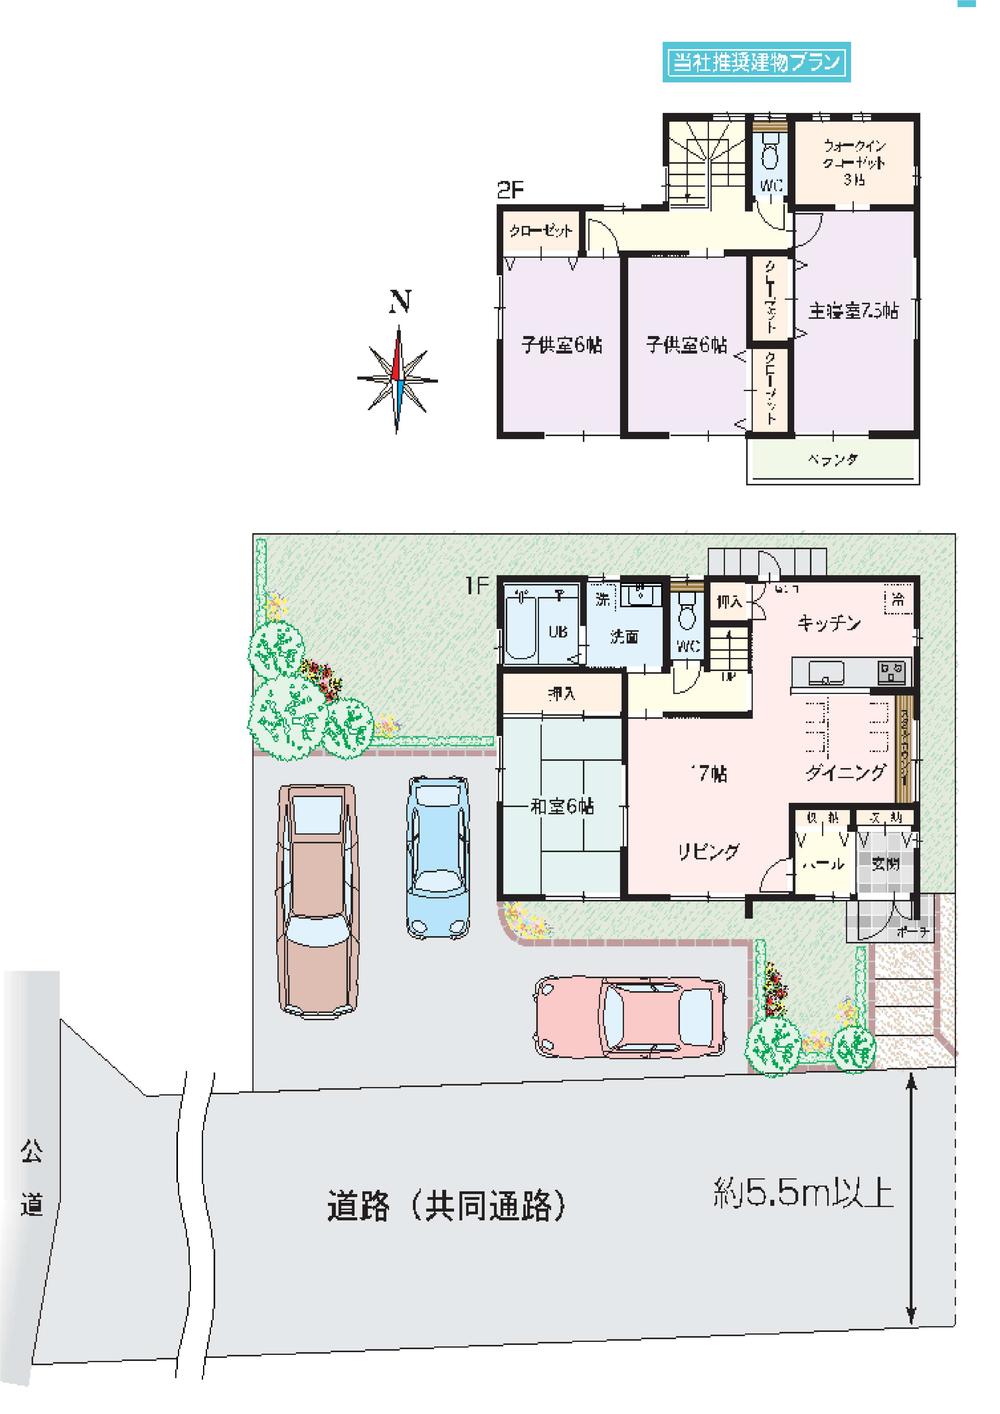 Compartment view + building plan example. Building plan example (A) 4LDK, Land price 11.5 million yen, Land area 169.98 sq m , Building price 21.3 million yen, Building area 110.96 sq m